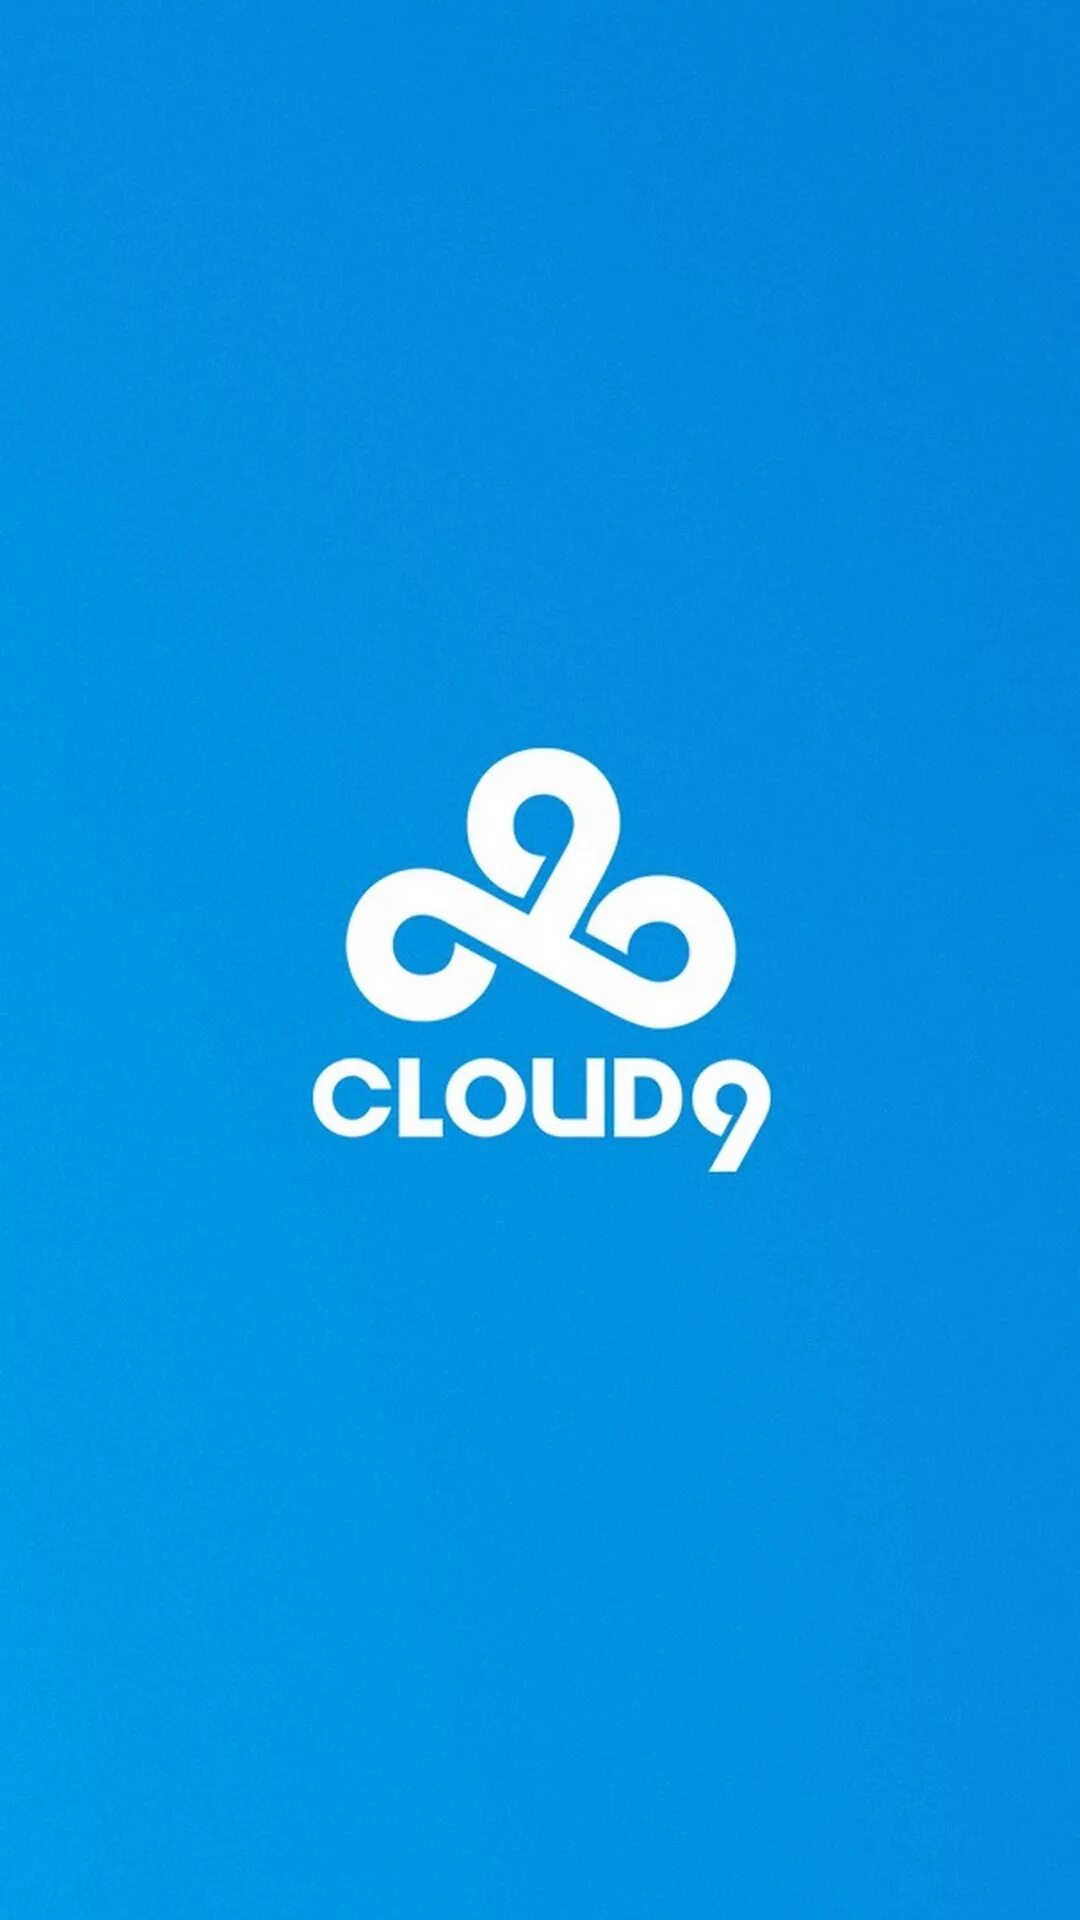 Ncloud. Клауд 9. Логотип cloud9. Cloud9 на аву. Эмблема Клауд 9.